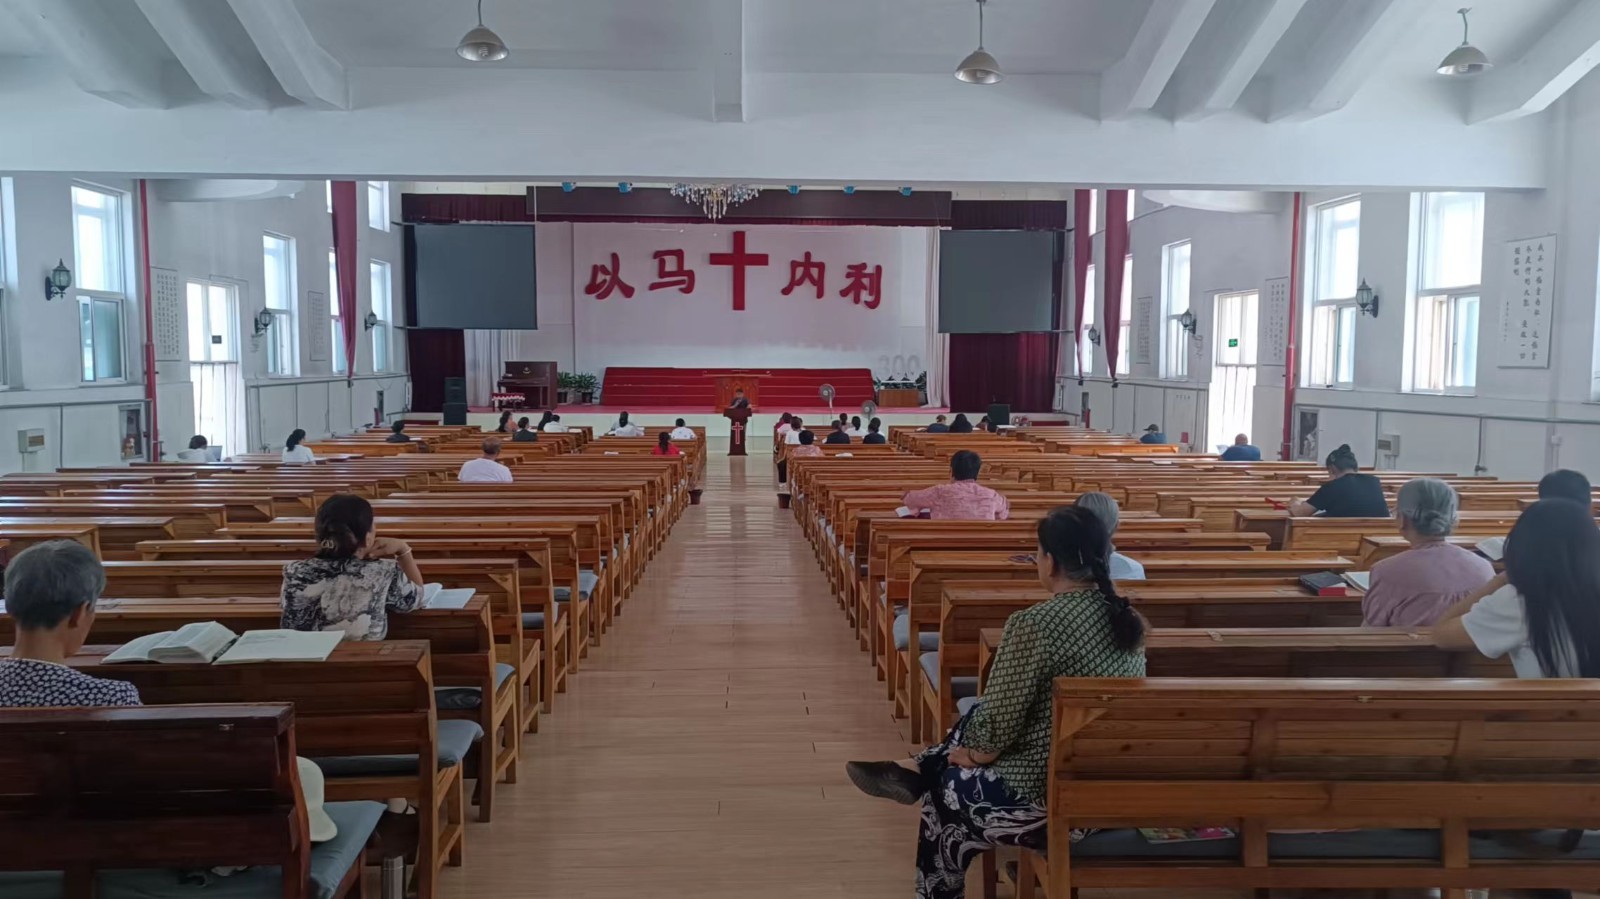 An Interior view of a Chinese rural church